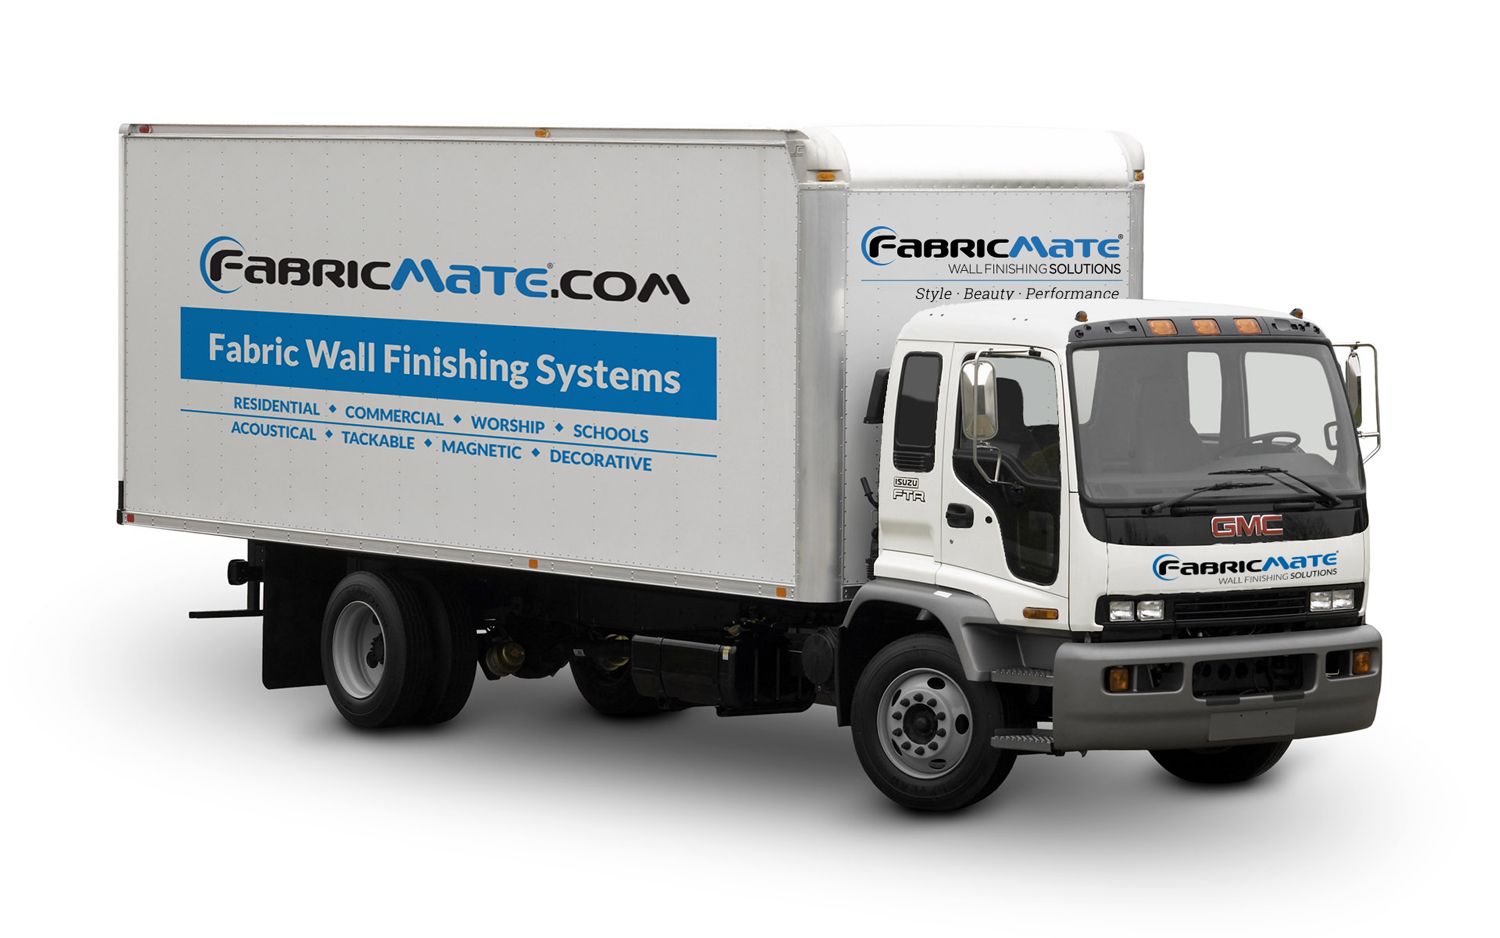 Fabricmate Truck - Delivery